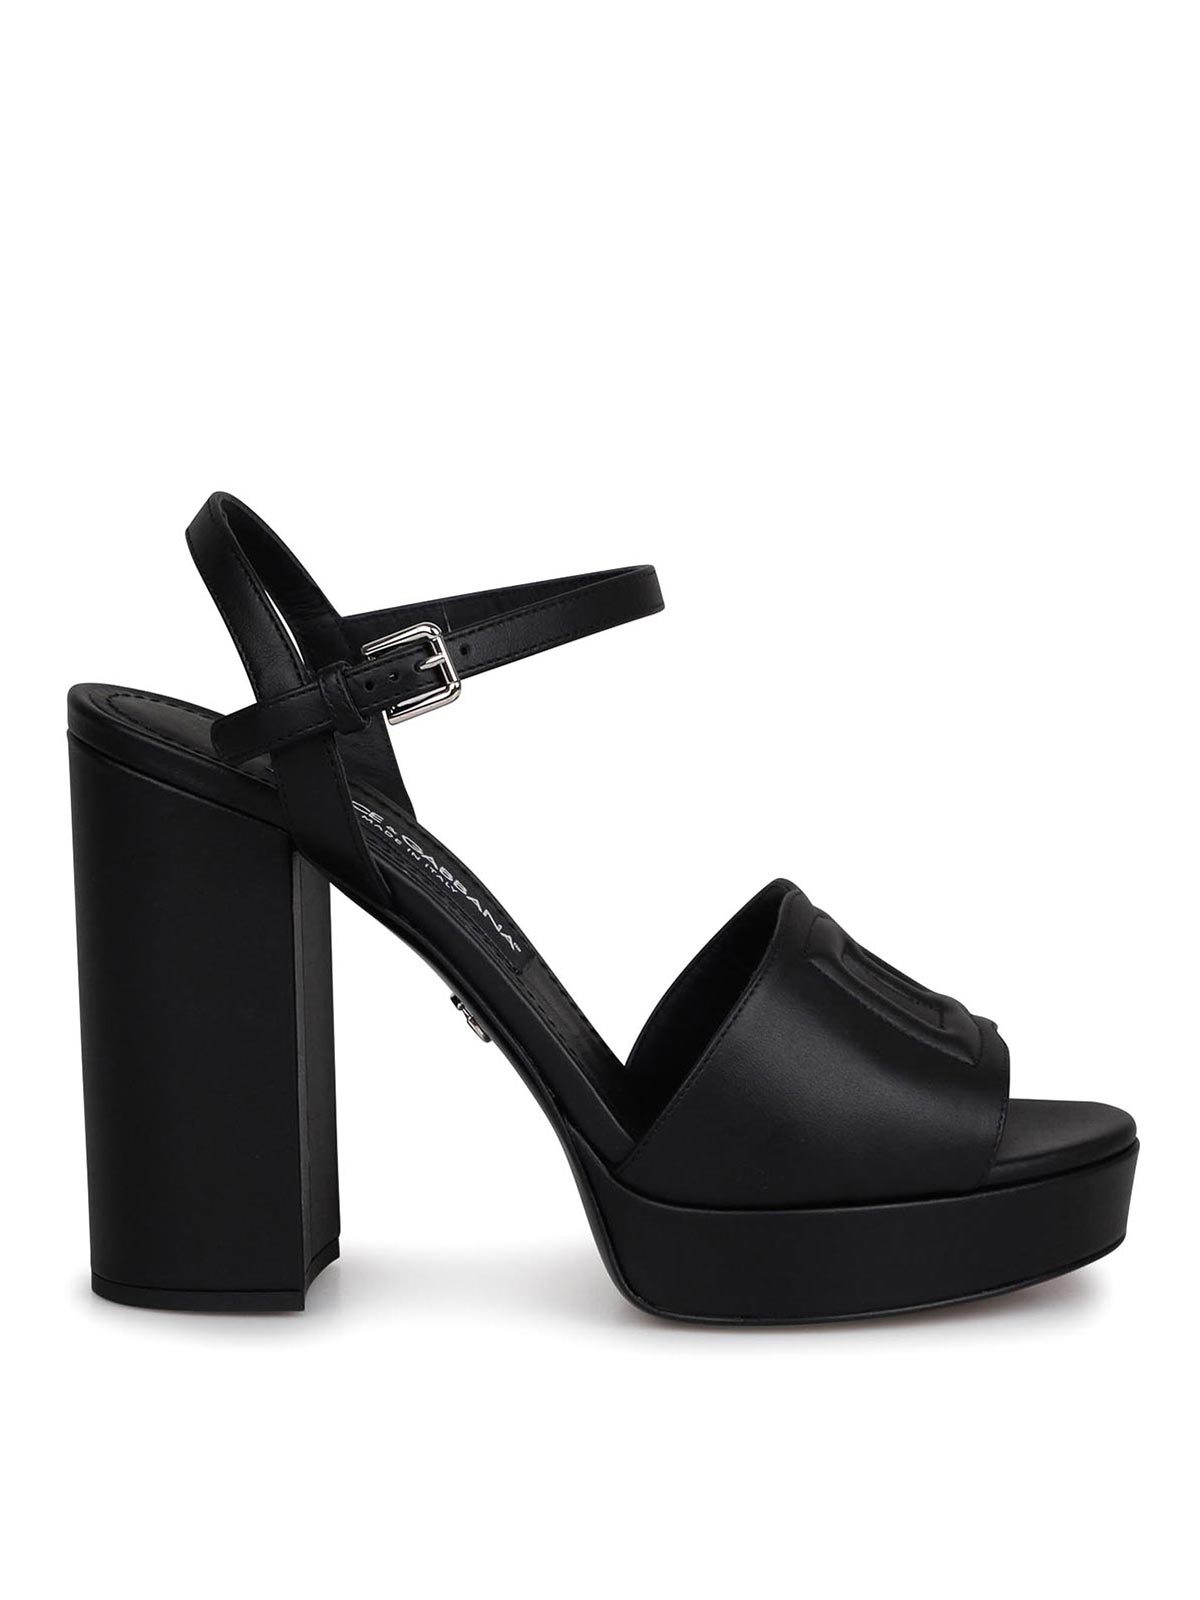 Dolce & Gabbana Keira Sandals 115mm In Black